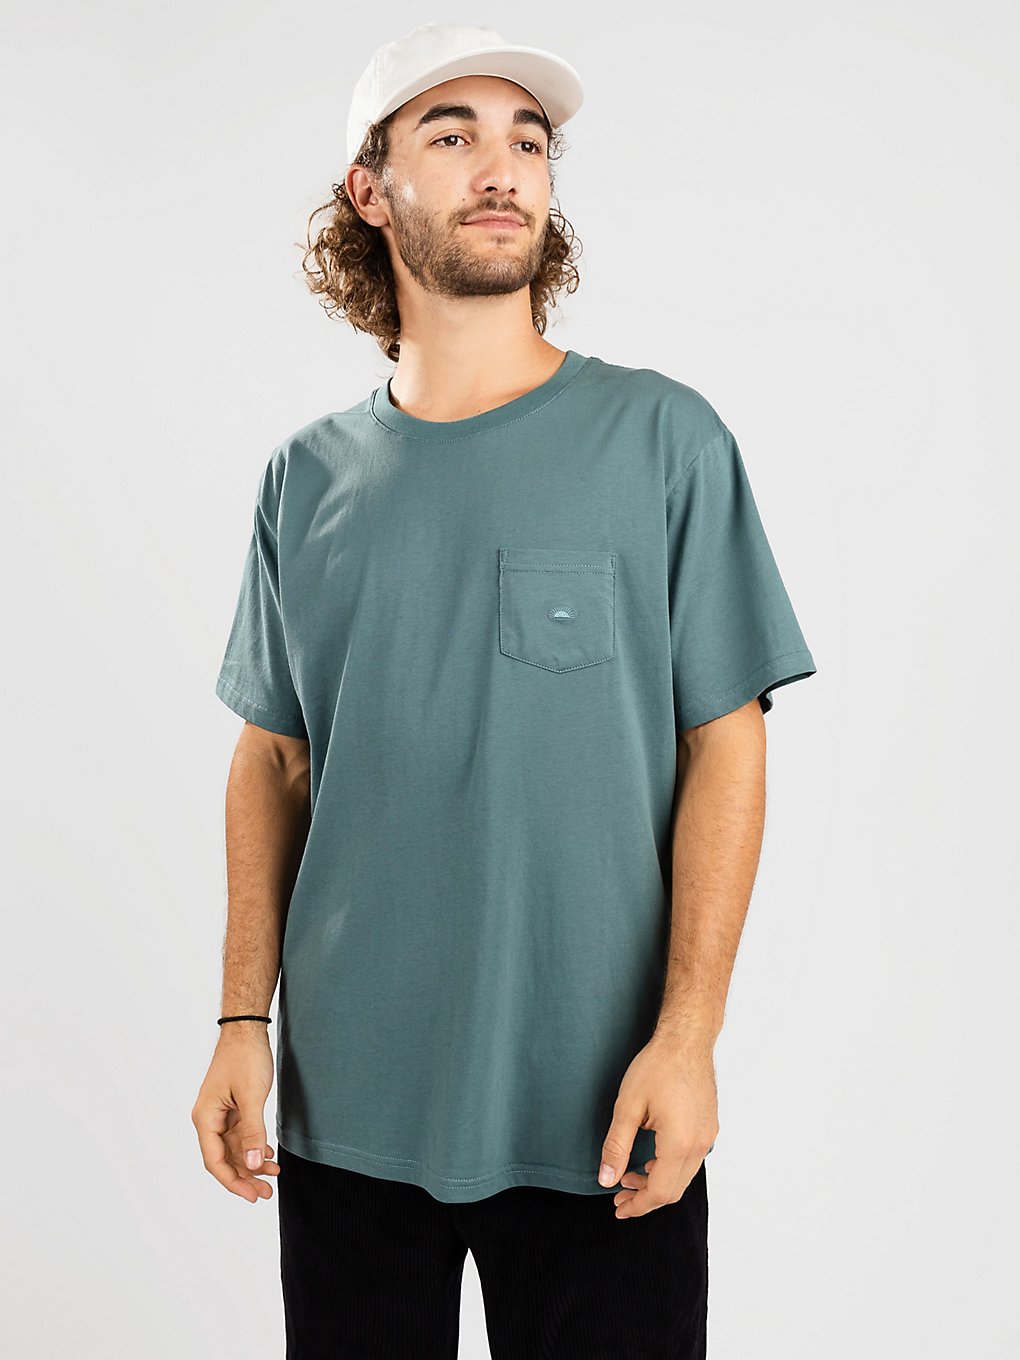 Rhythm Embroidered Pocket T-Shirt teal kaufen